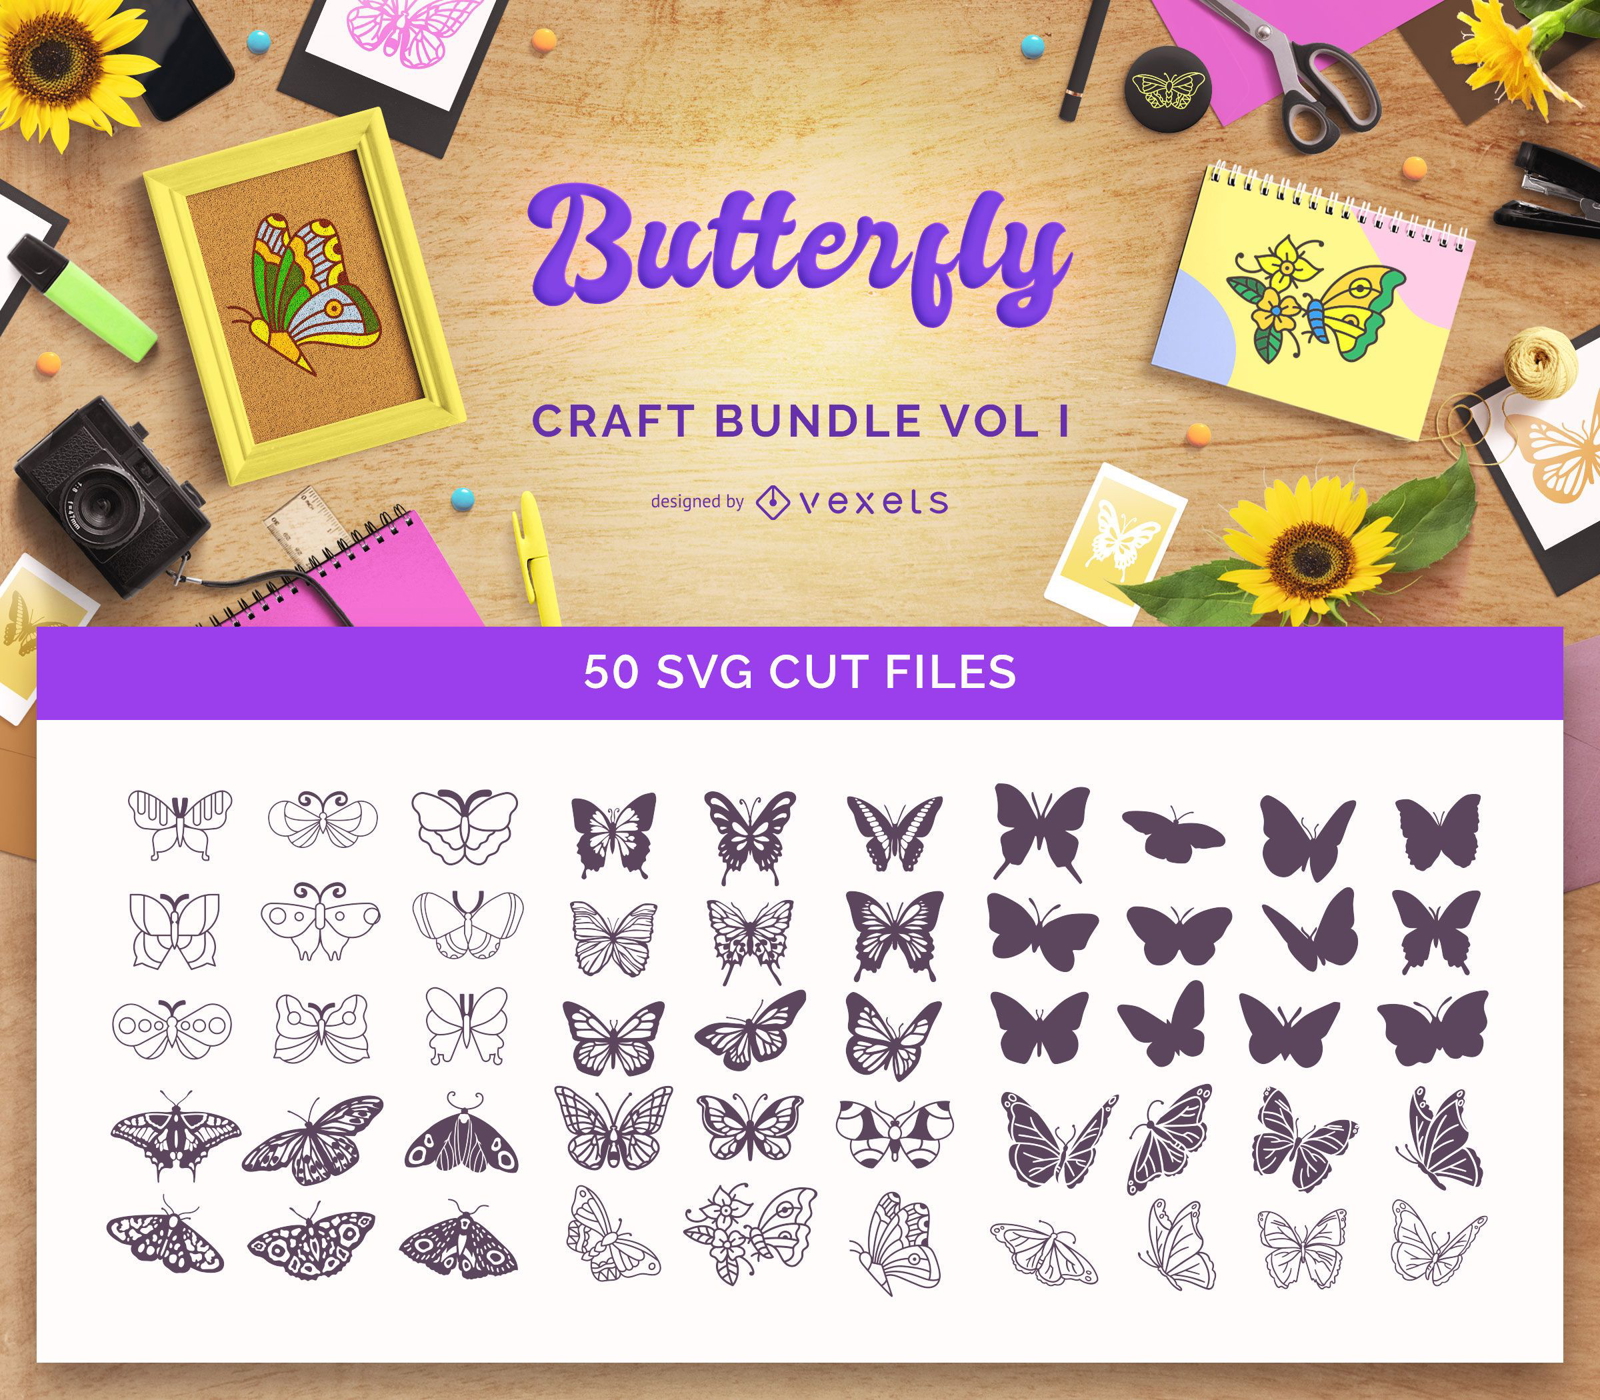 Paquete de manualidades de mariposas Vol I